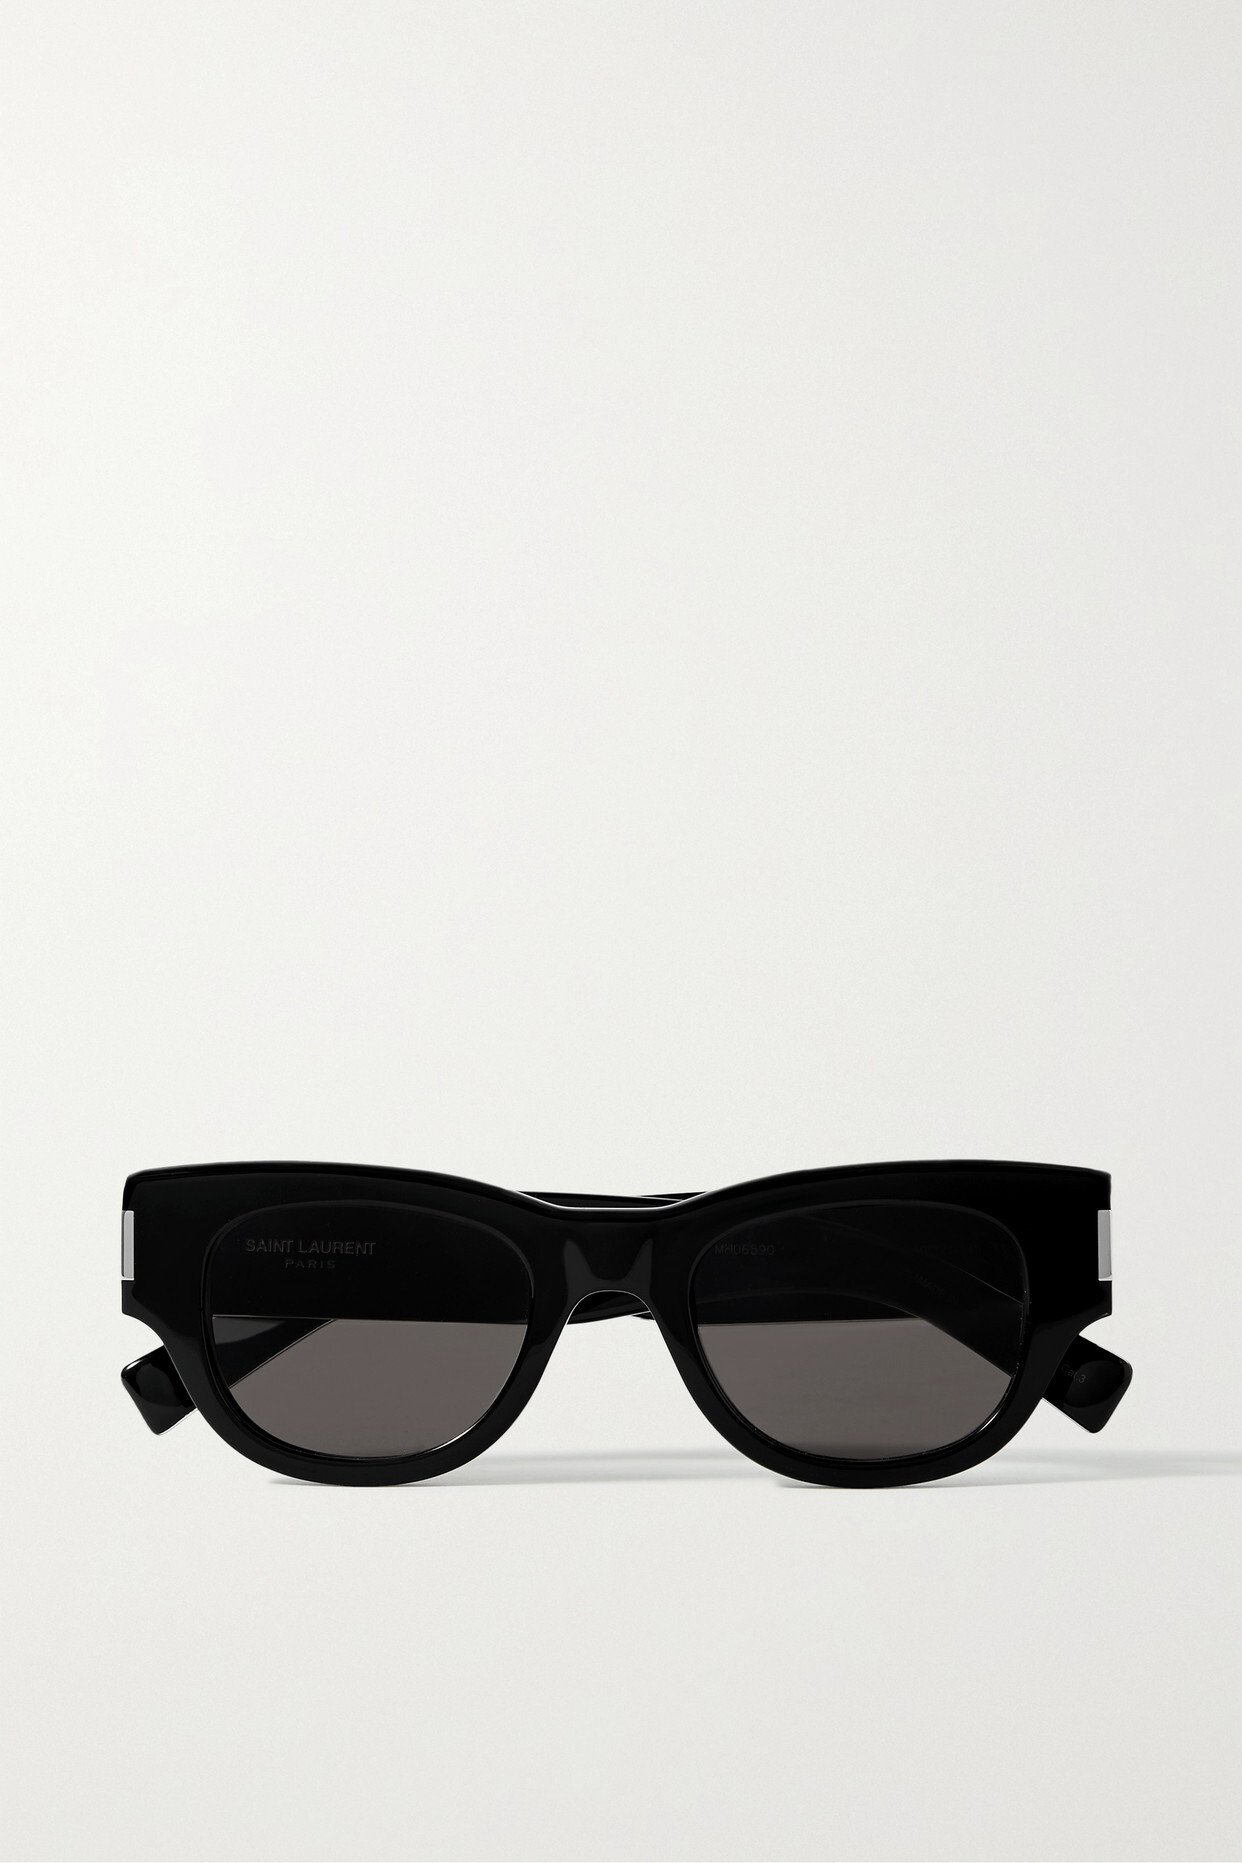 SAINT LAURENT Eyewear - Round-frame Acetate Sunglasses - Black